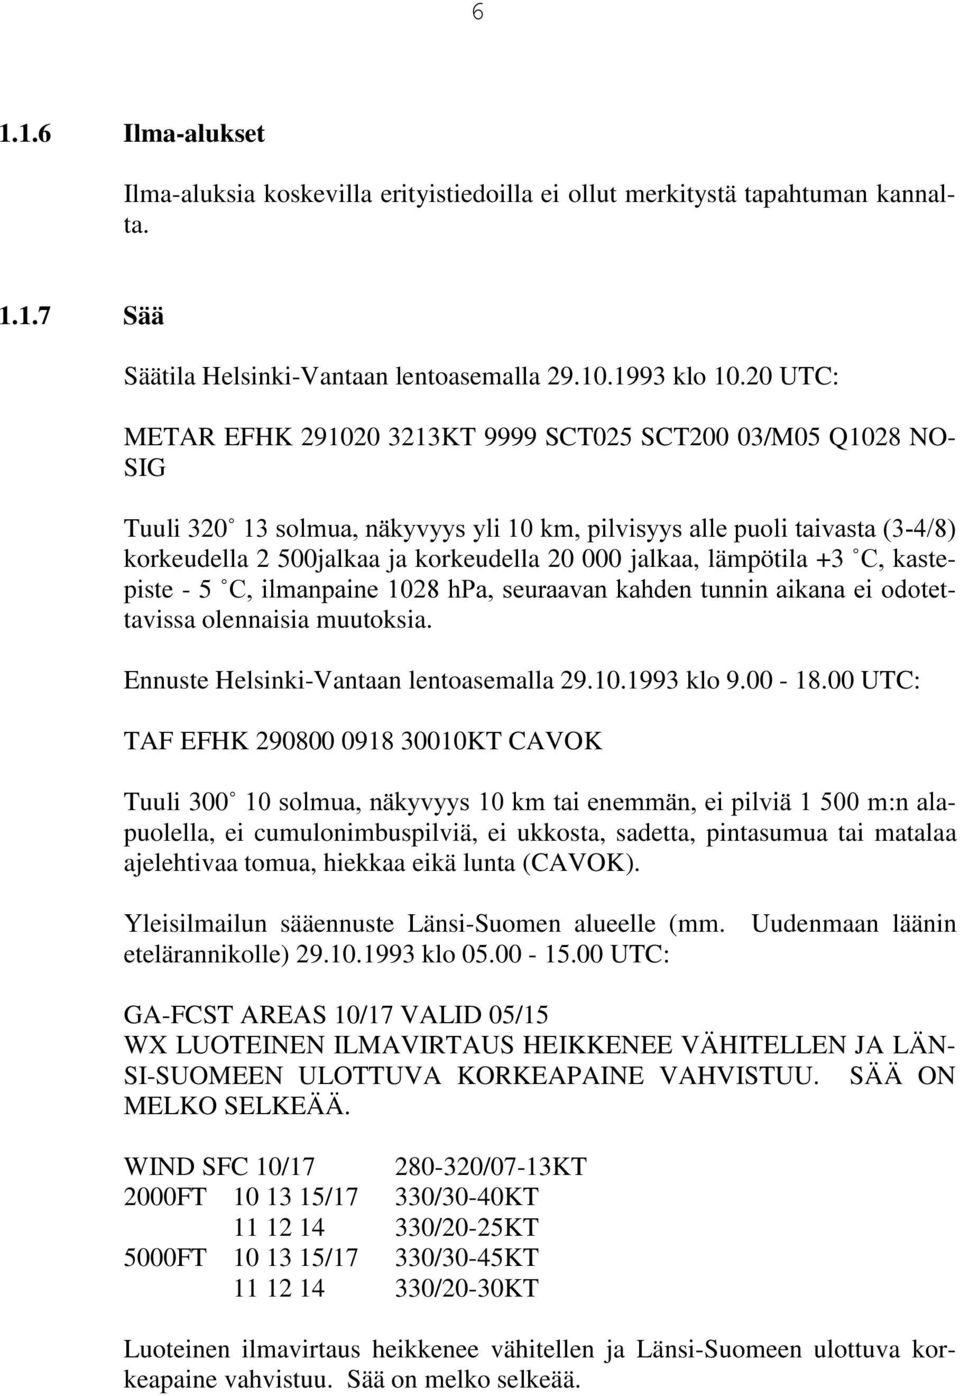 Û&NDVWepiste - 5 Û&LOPDQSDLQHK3DVHXUDDYDQNDKGHQWXQQLQDLNDQDHLRGRWHttavissa olennaisia muutoksia. Ennuste Helsinki-Vantaan lentoasemalla 29.10.1993 klo 9.00-18.